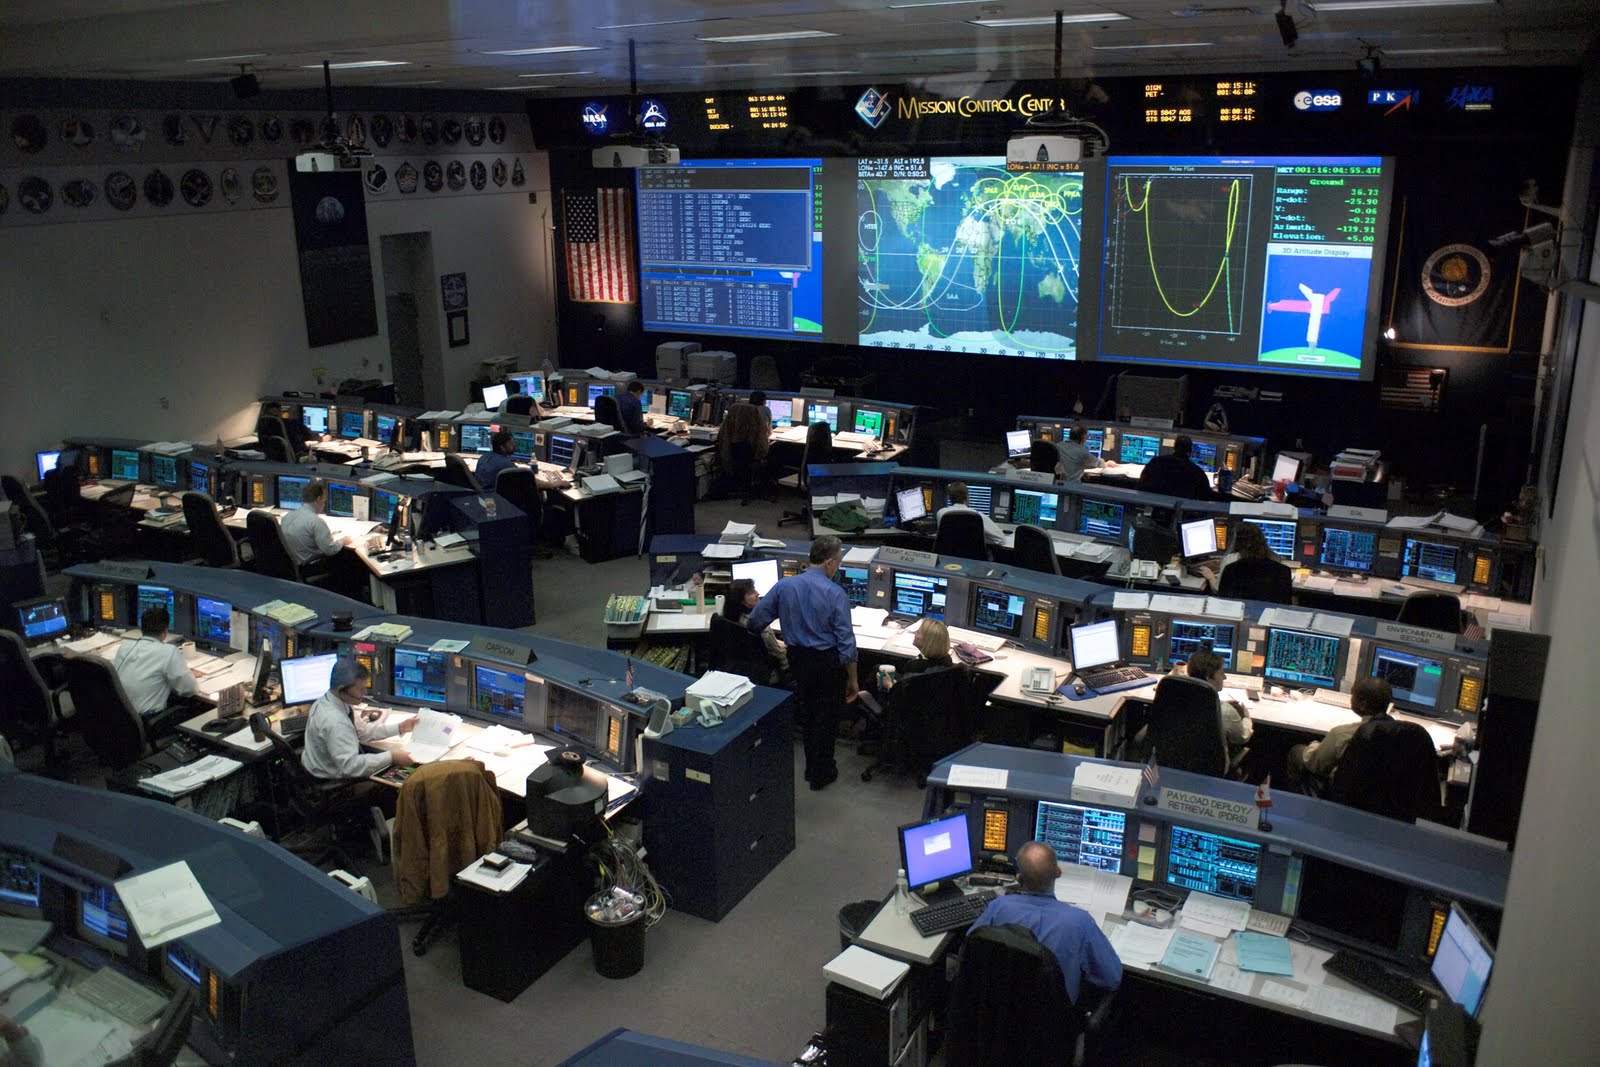 NASA mission control